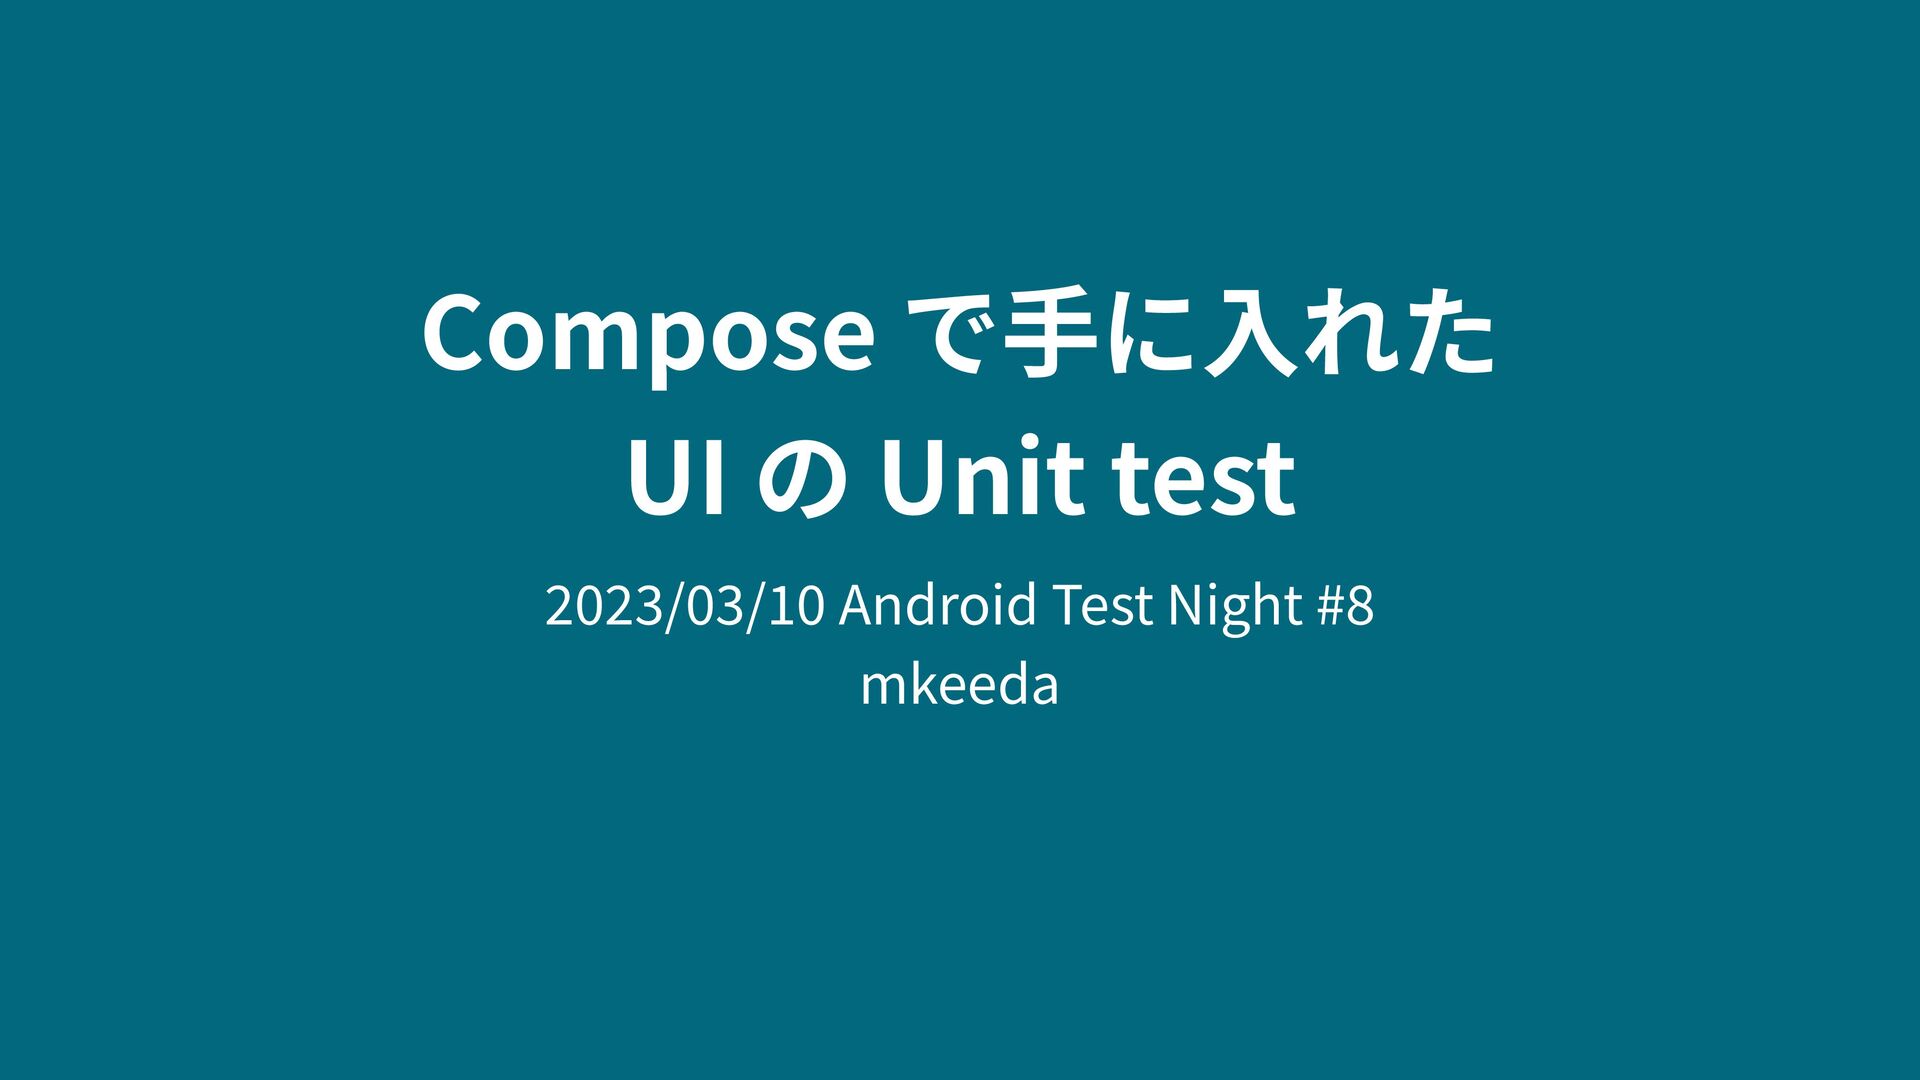 Slide Top: Compose で手に入れた UI の Unit test